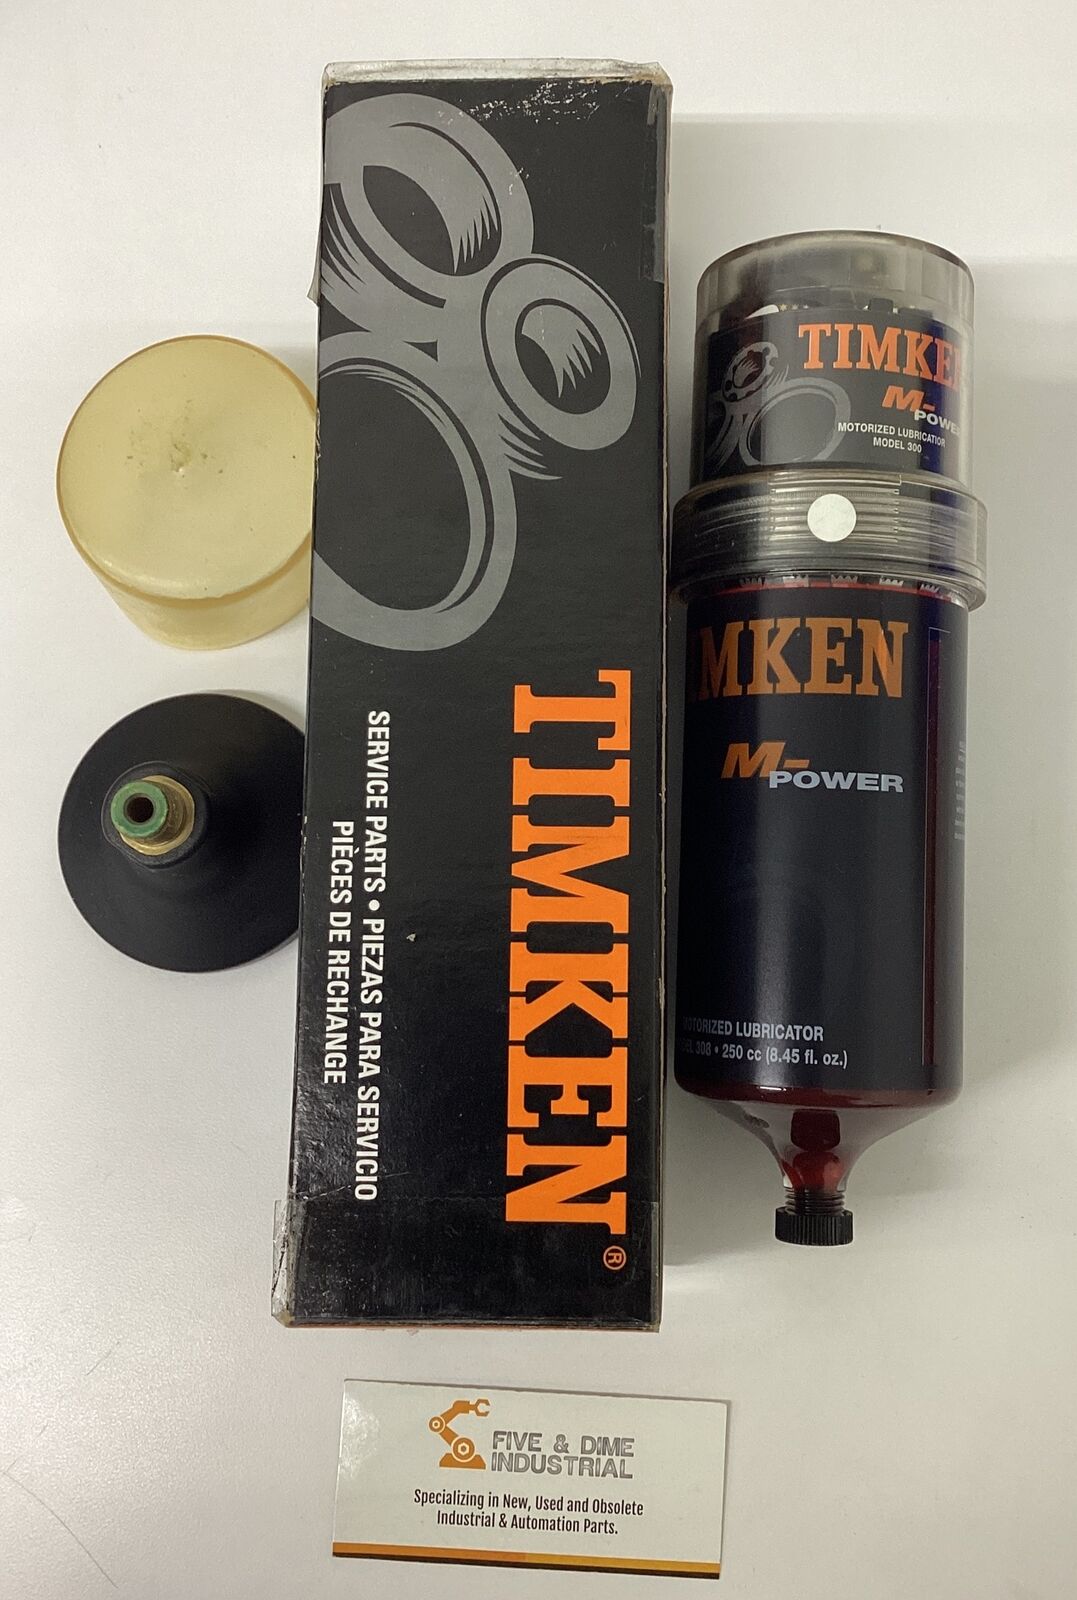 Timken  PM282405 G-Power, M-Power Single Point Lubricator (GR226)